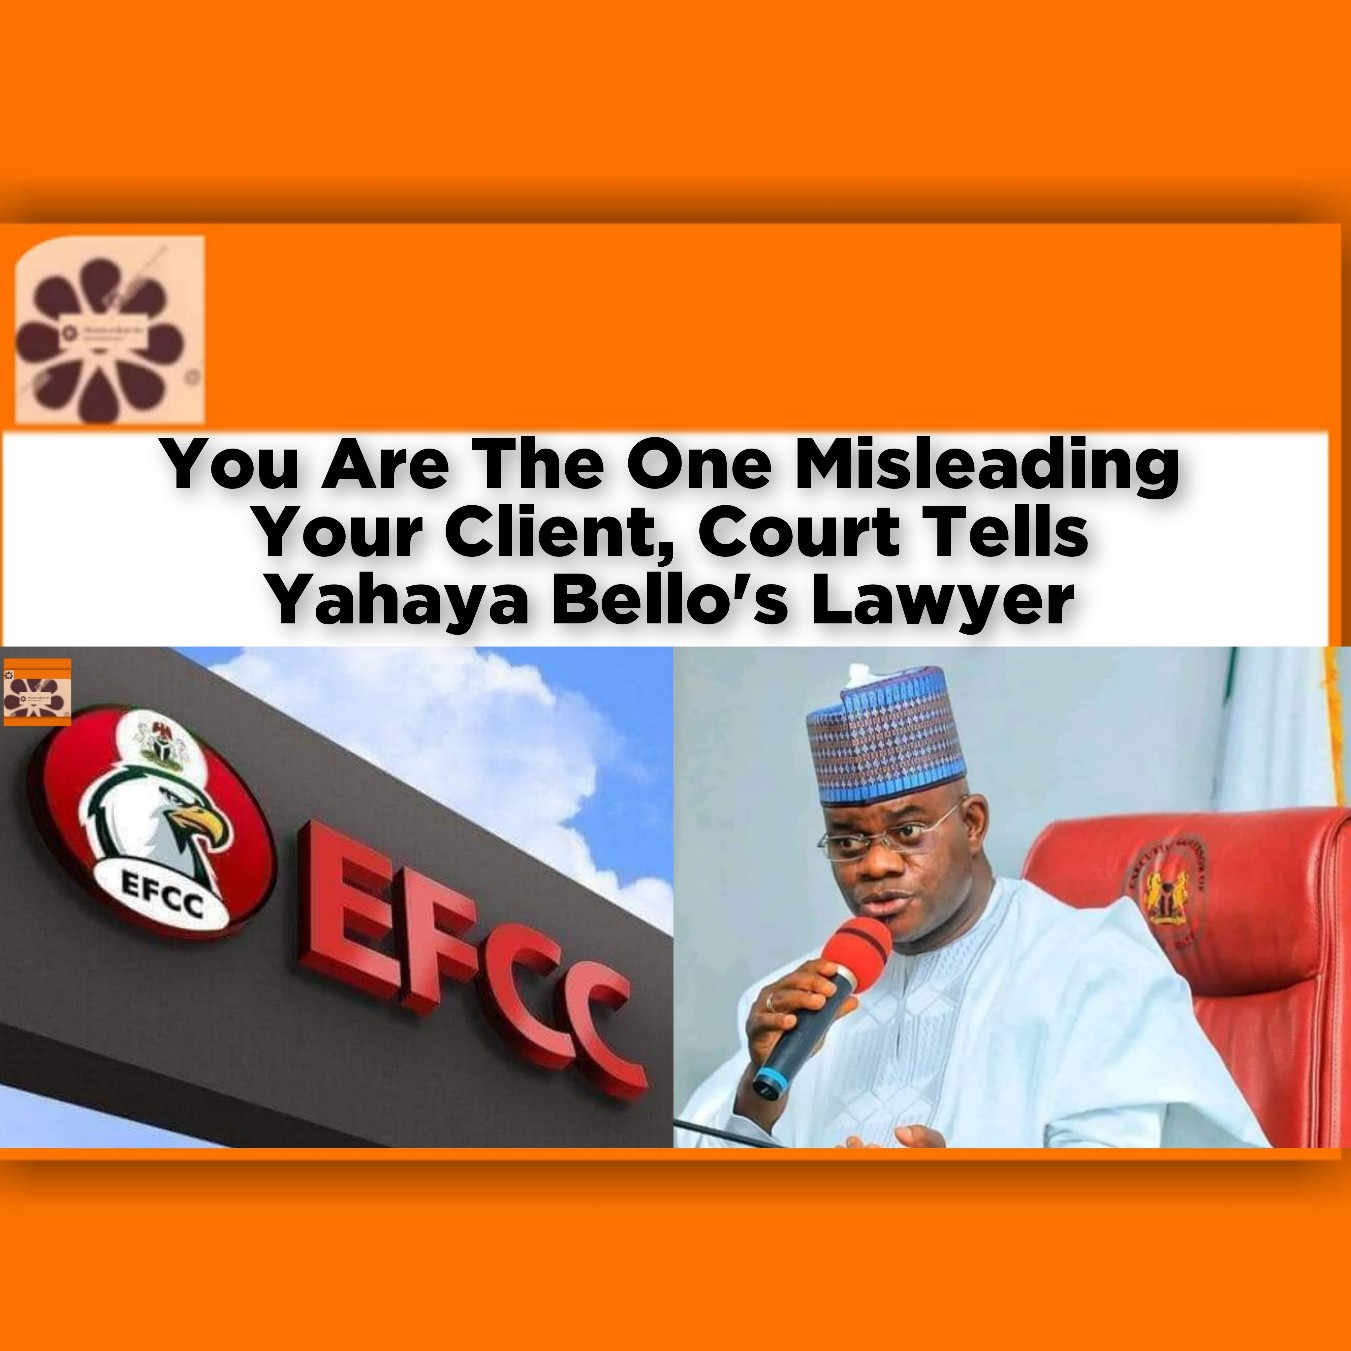 You Are The One Misleading Your Client, Court Tells Yahaya Bello's Lawyer ~ OsazuwaAkonedo #Yoruba